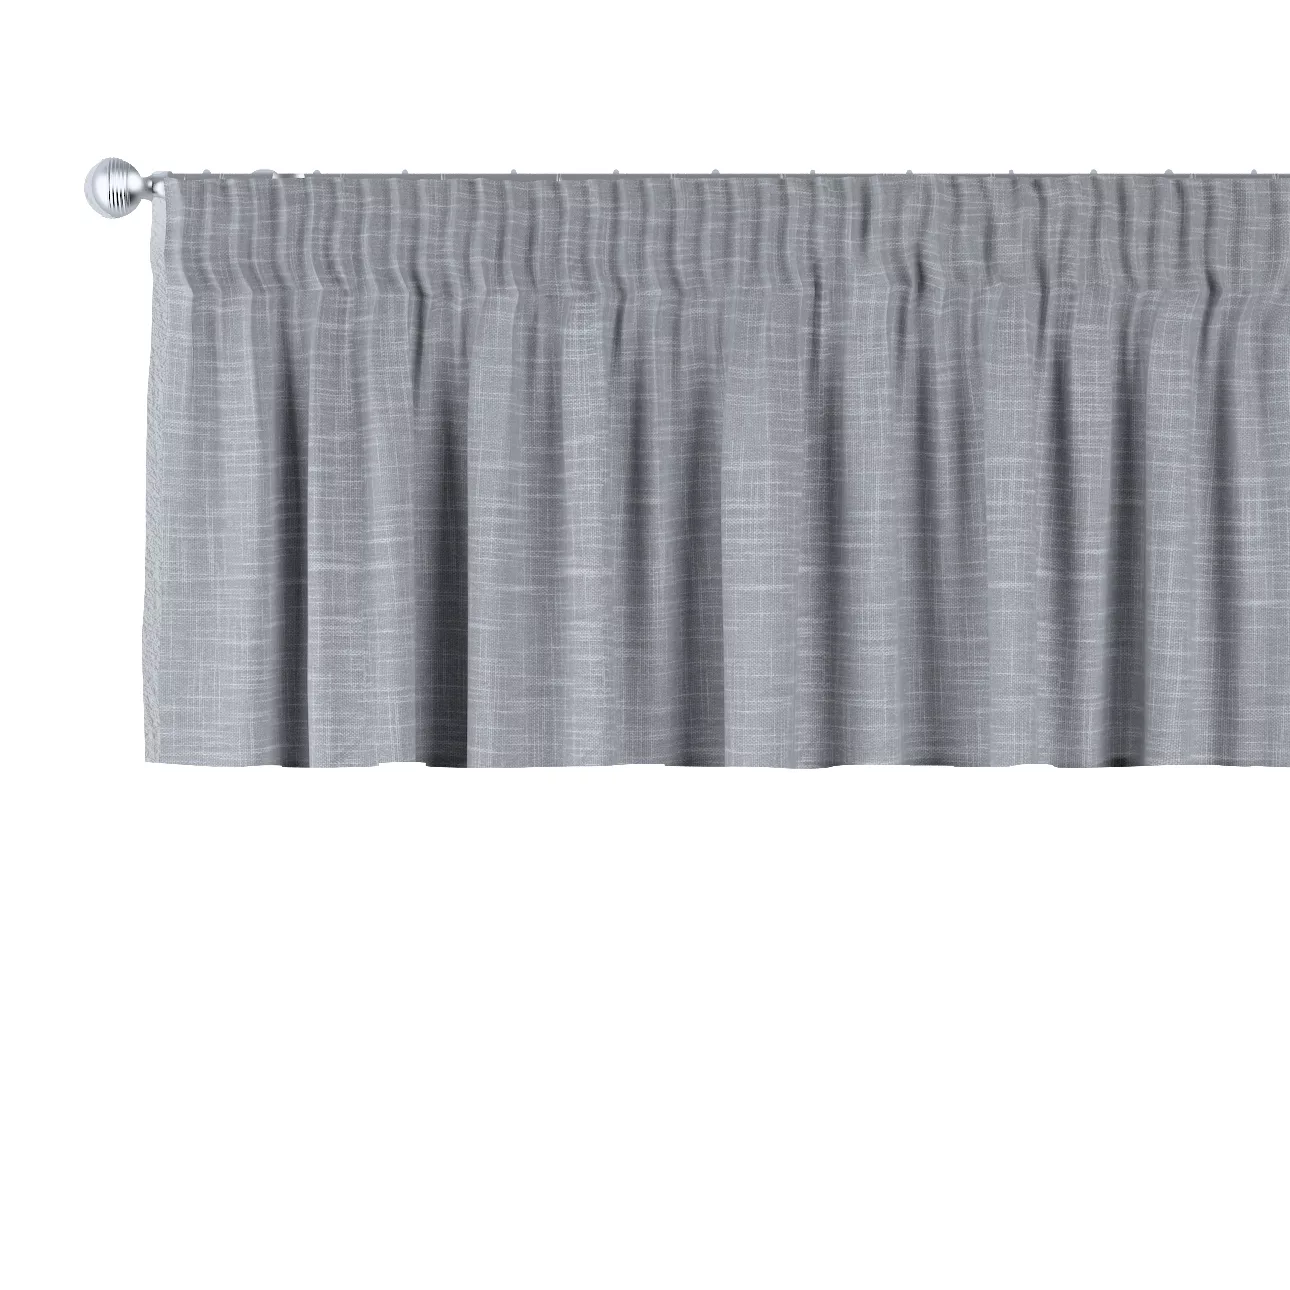 Kurzgardine mit Kräuselband, grau, 390 x 40 cm, Harmony (144-78) günstig online kaufen